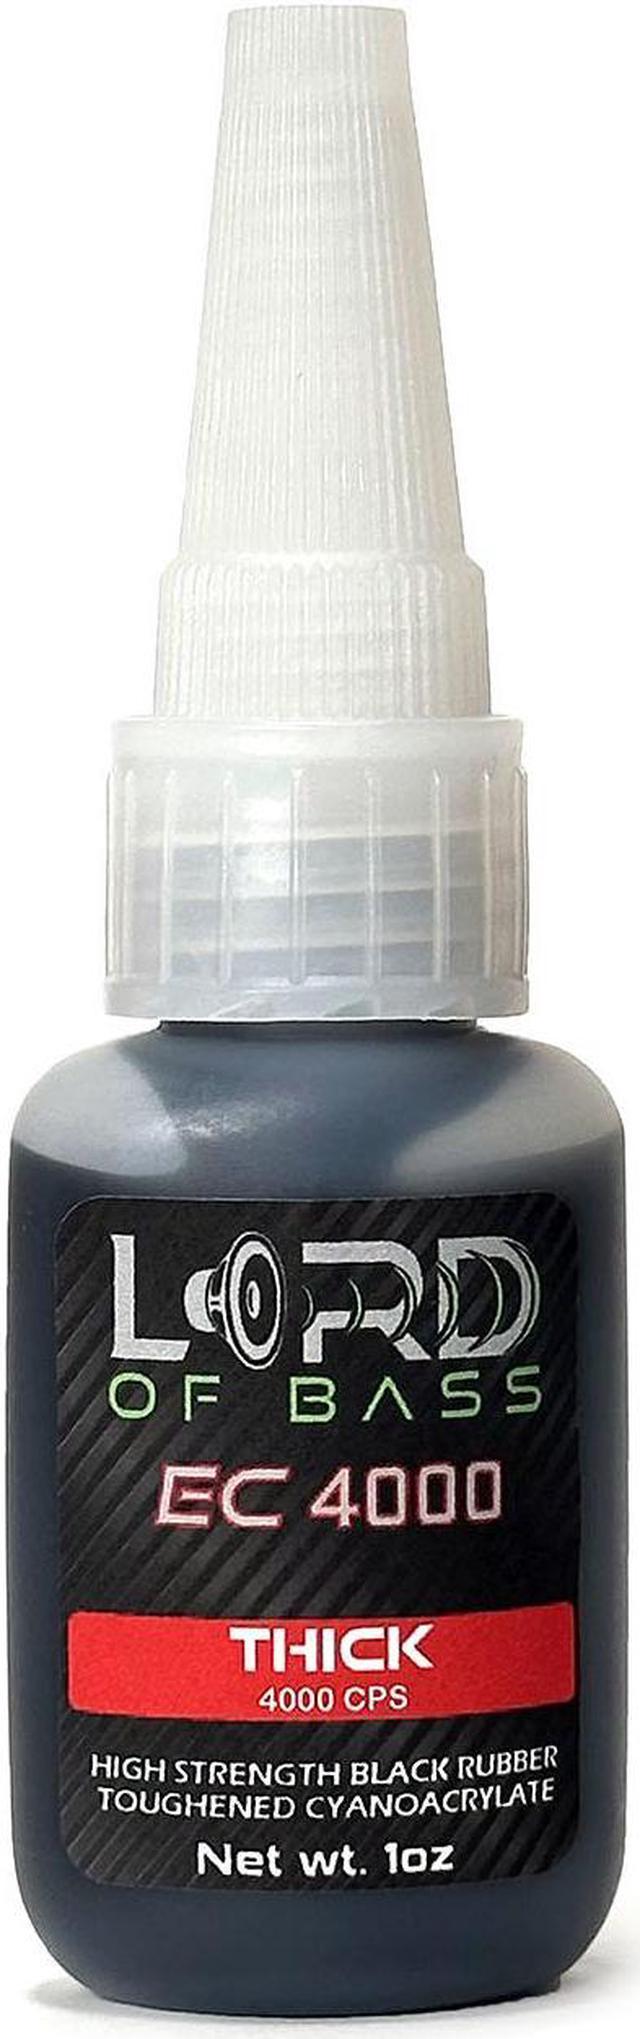 Premium Grade Cyanoacrylate (CA) Super Glue 1 oz Black Rubber Toughened  Thick 4000 CPS Viscosity- Lord of Bass 